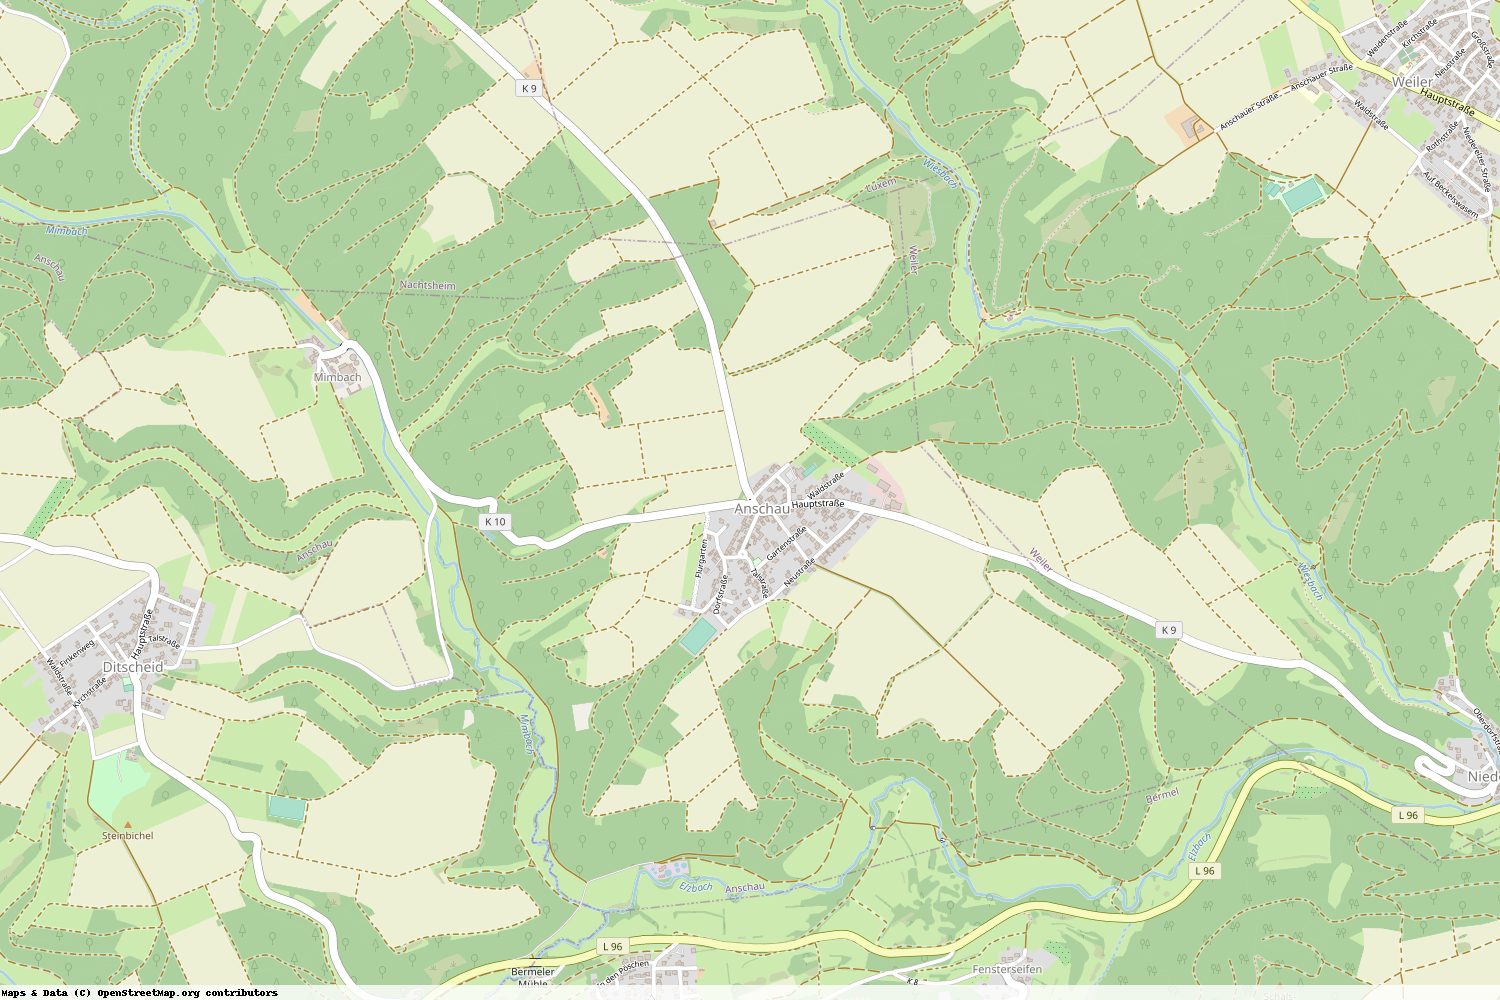 Ist gerade Stromausfall in Rheinland-Pfalz - Mayen-Koblenz - Anschau?